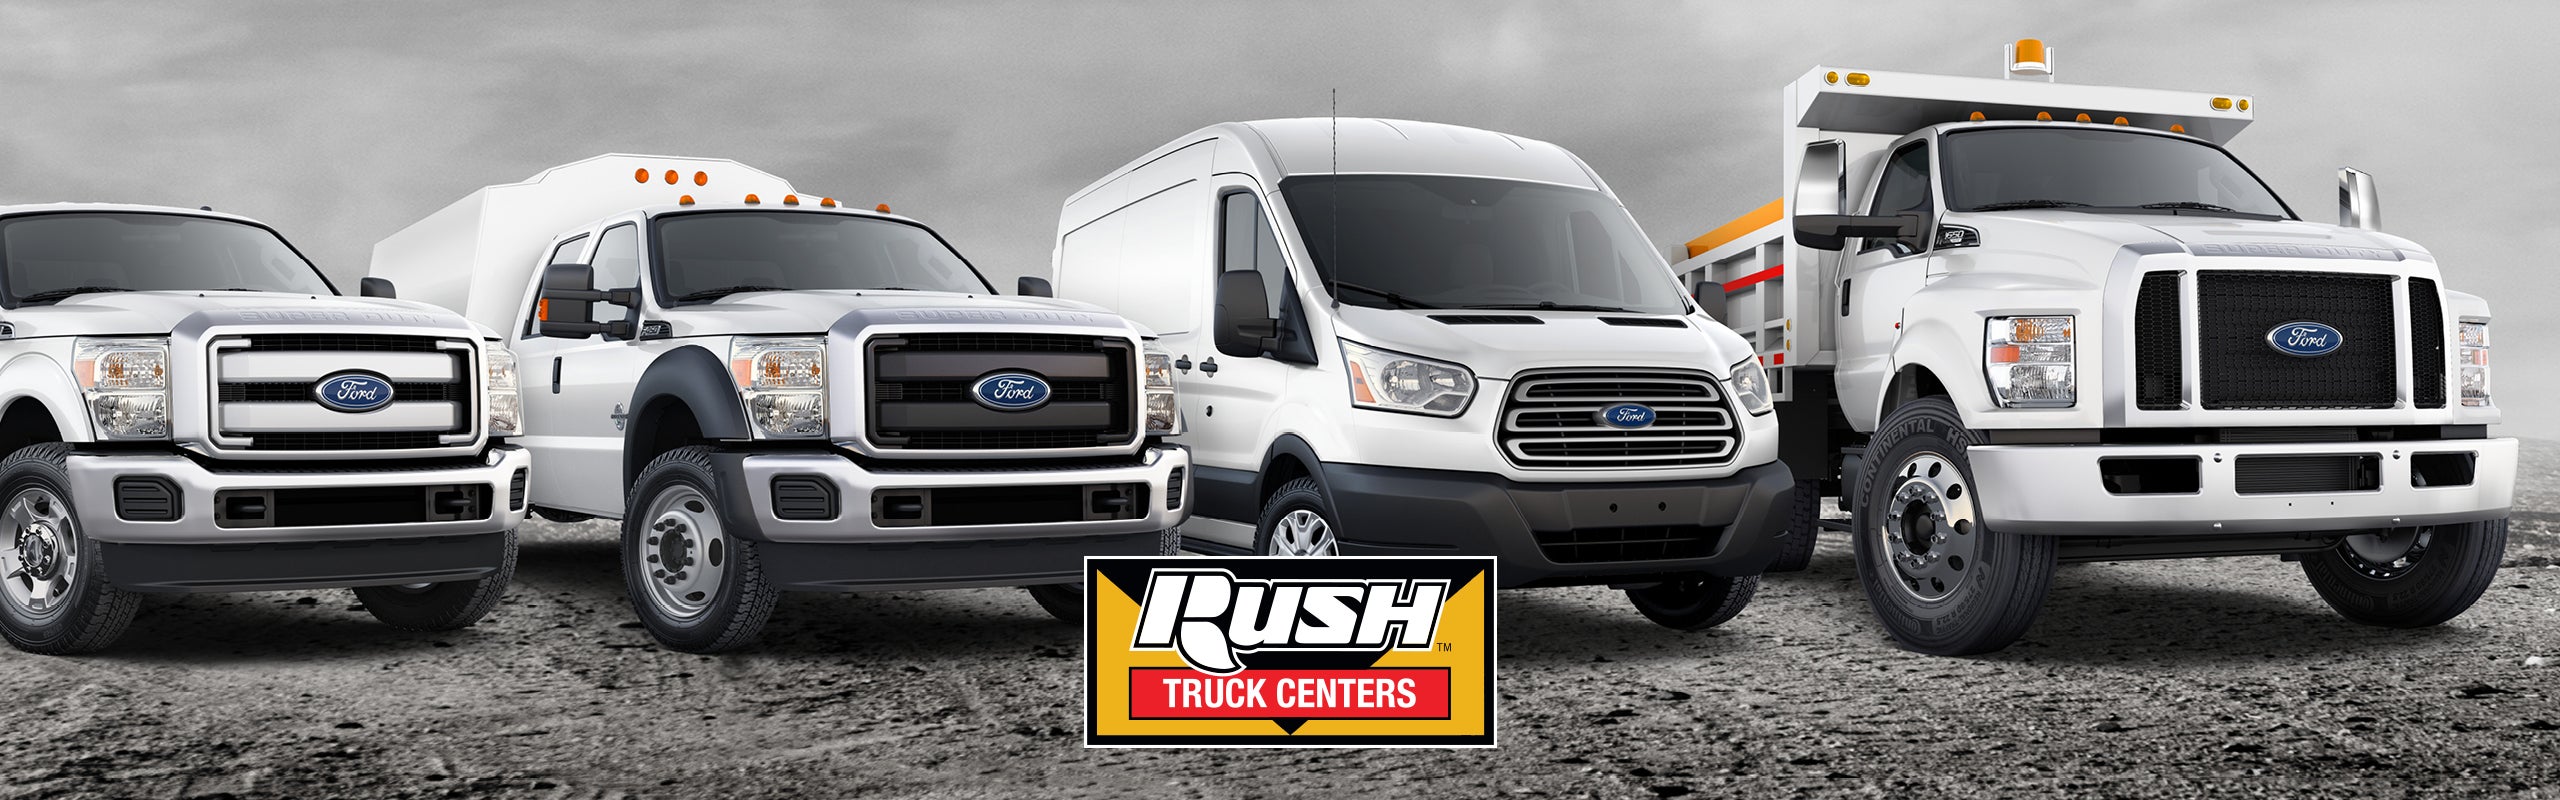 Rush Truck Center New Commercial Vehicles in Las Vegas, NV